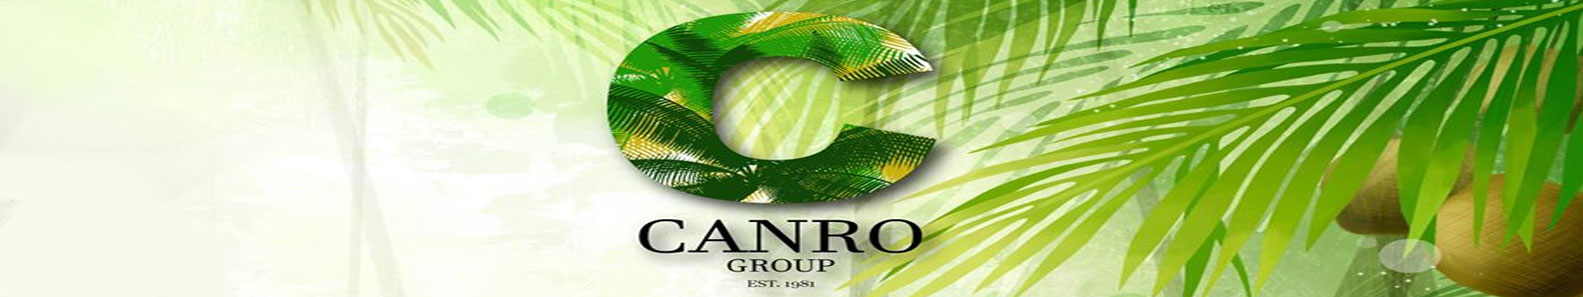 CANRO EXPORTS PVT LTD